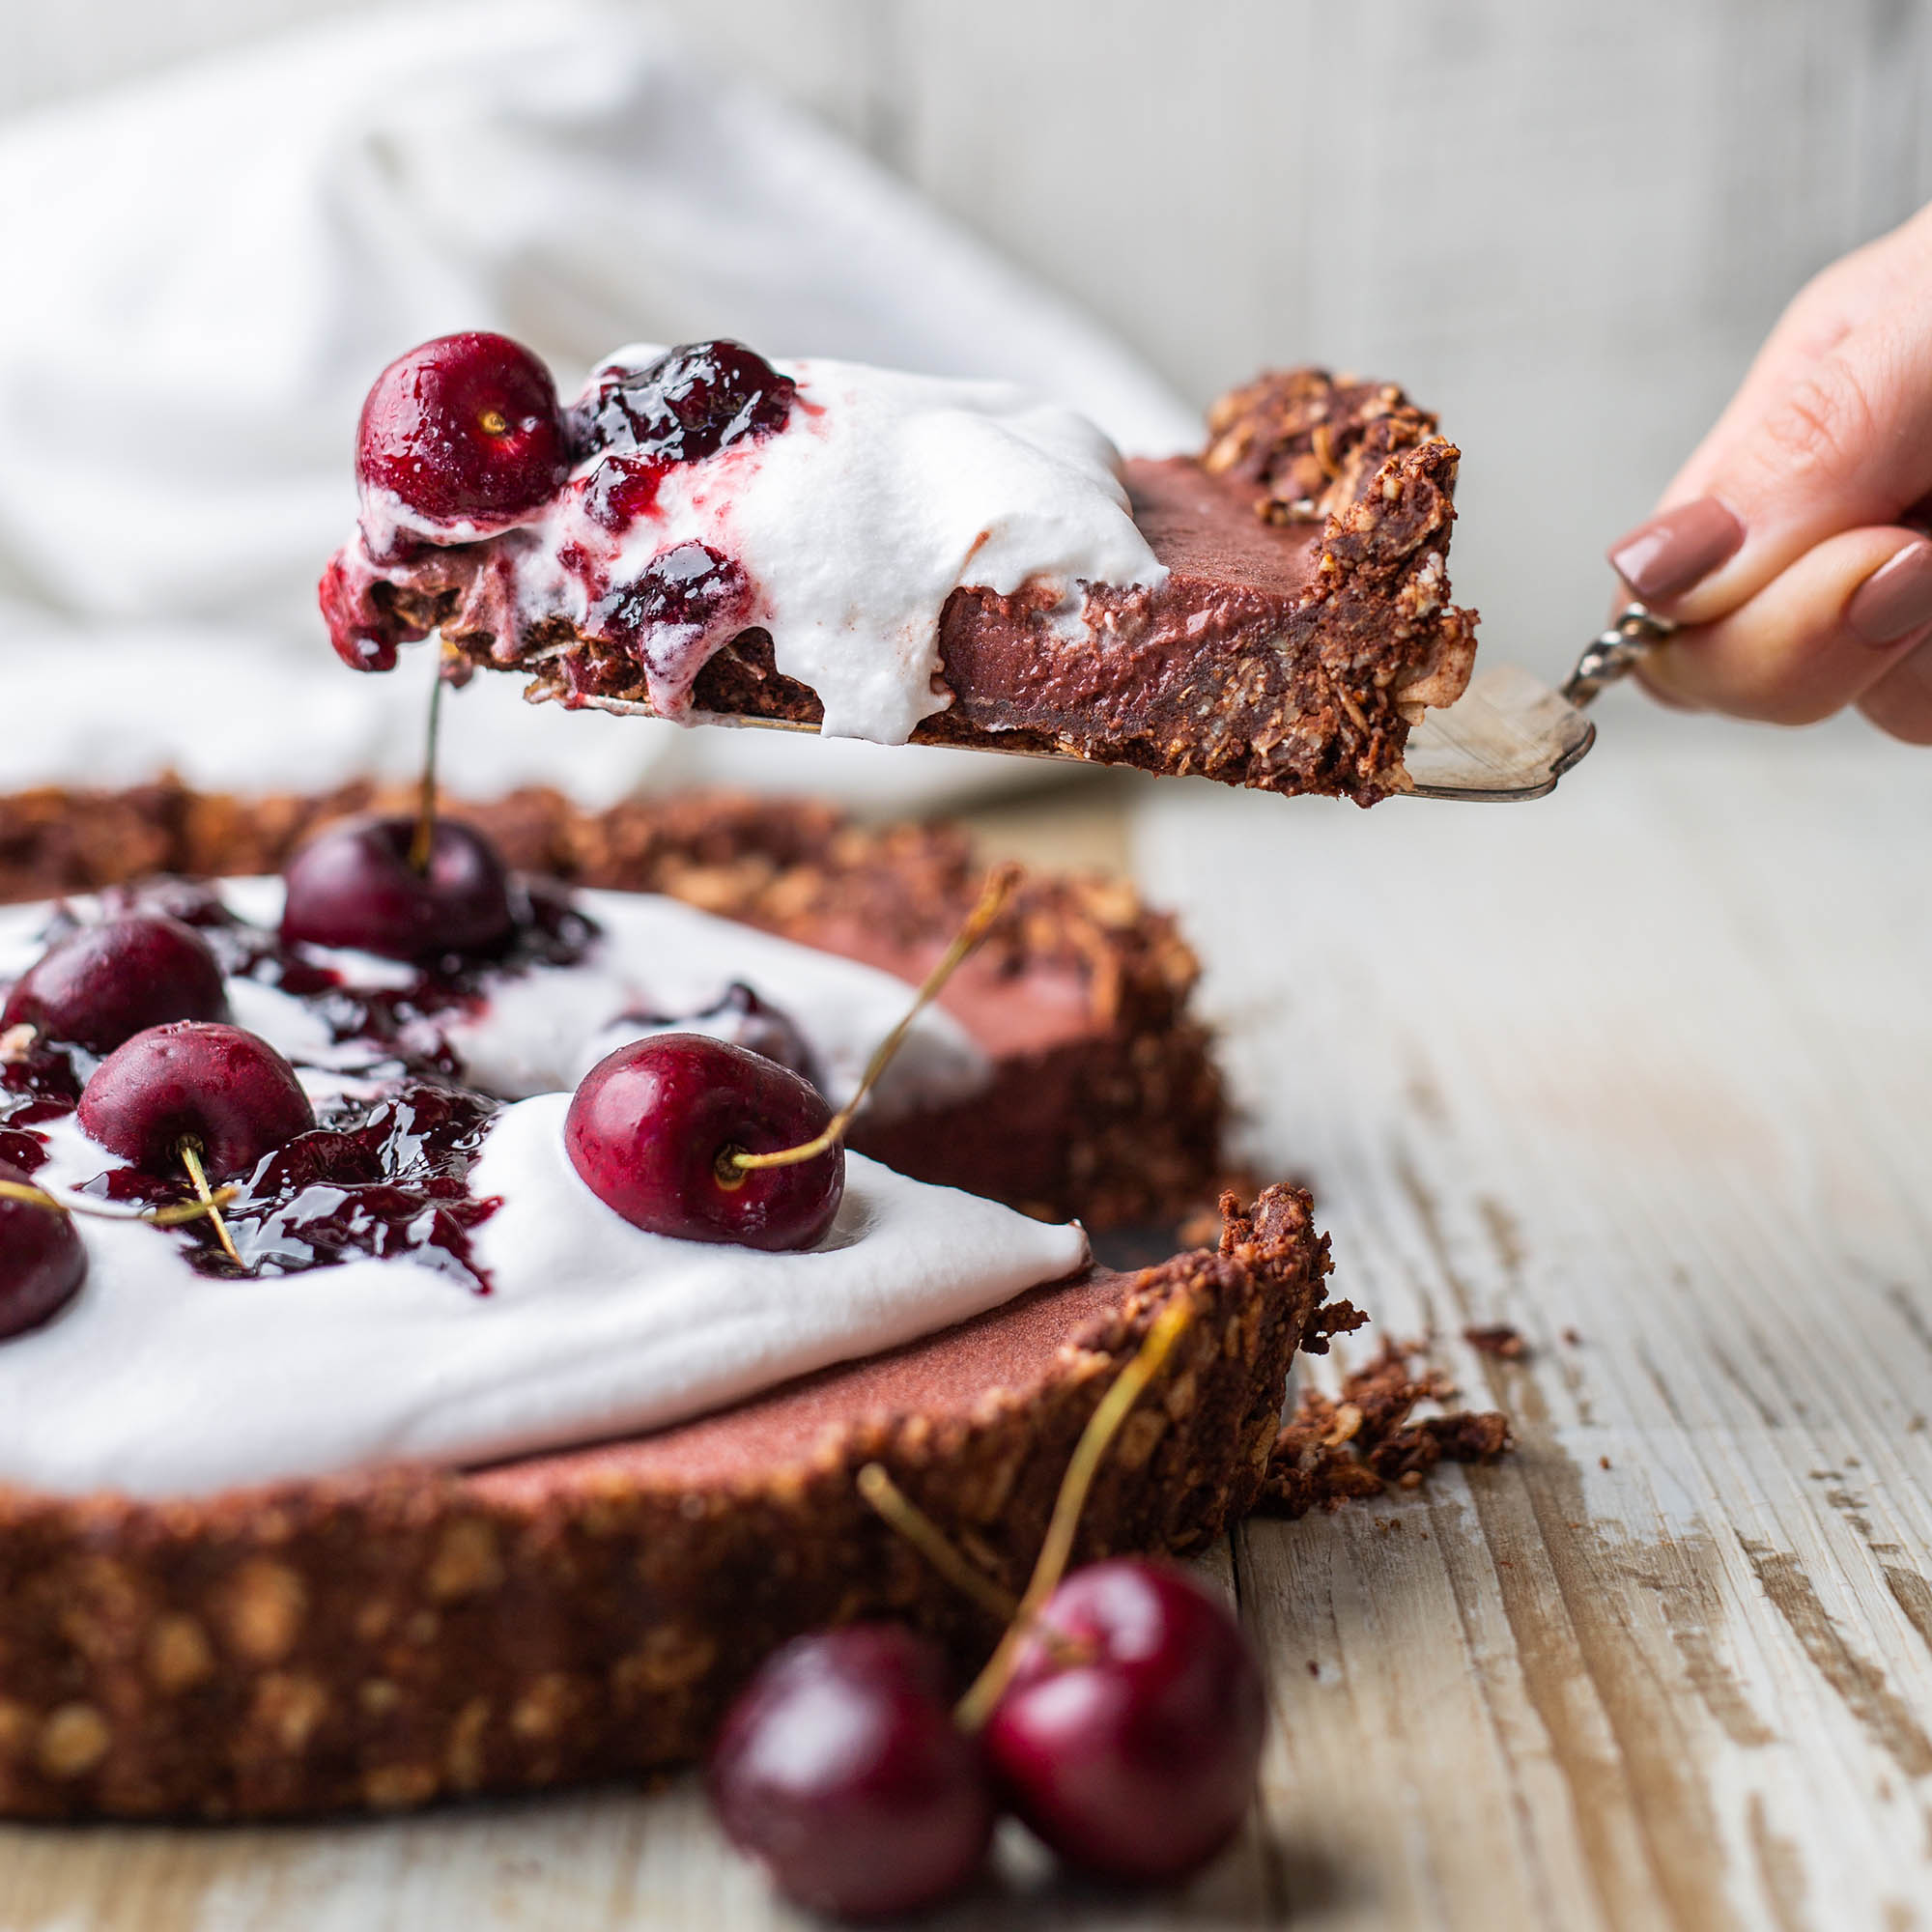 Healthy Vegan Chocolate Cherry Tart with Coconut Whipped Cream